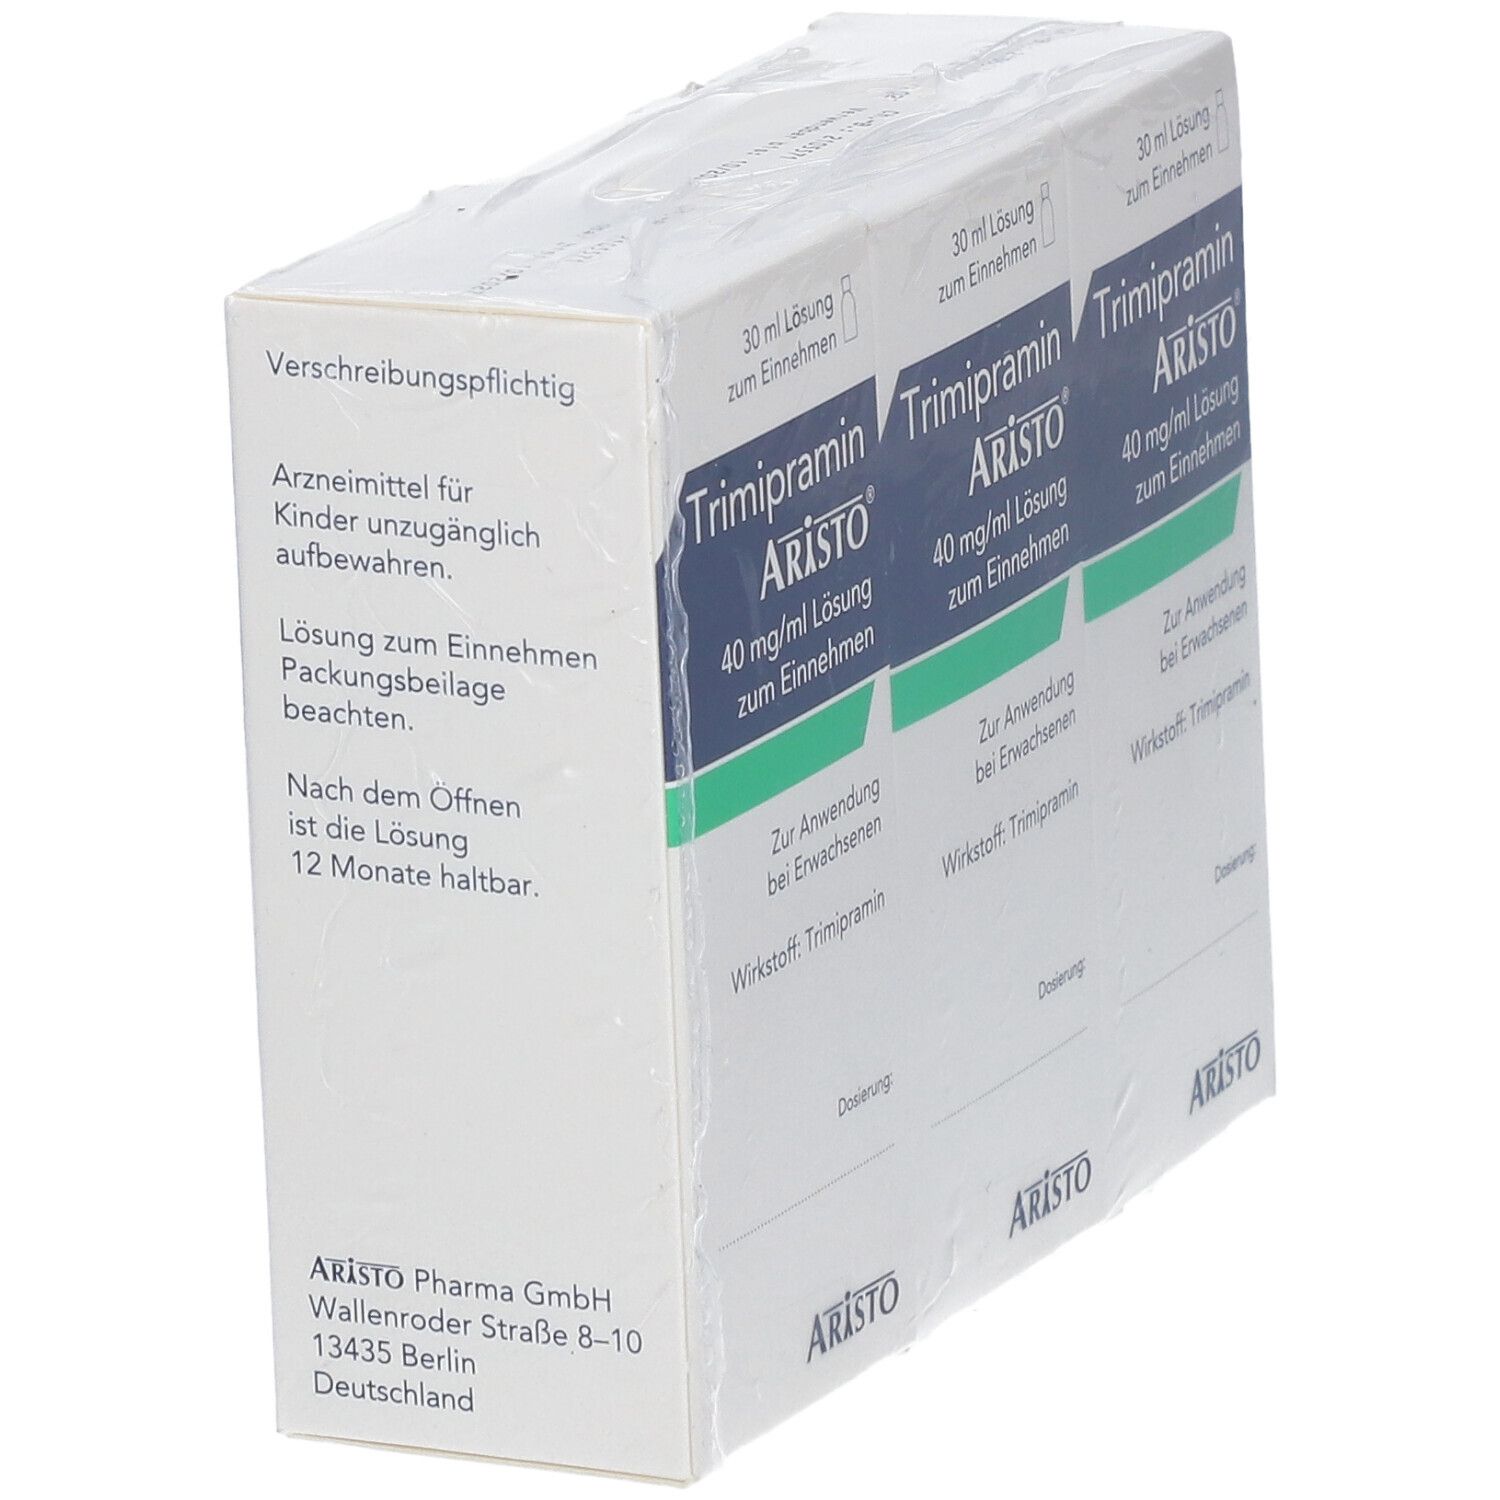 Trimipramin Aristo® 40 mg/ml